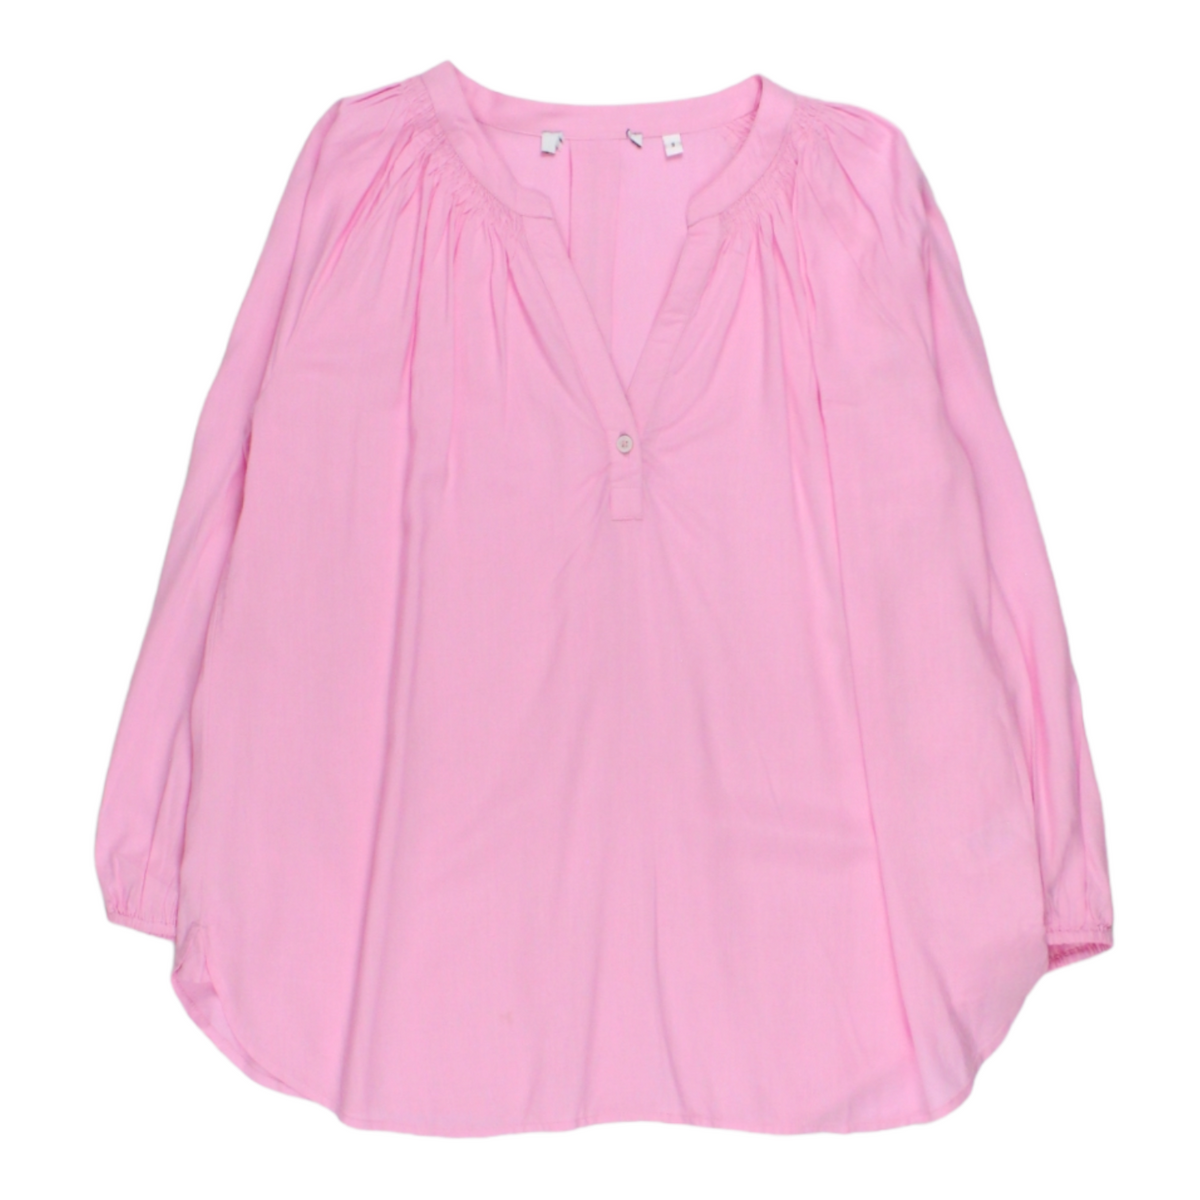 NRBY Pink Gathered Neckline Shirt - Sample